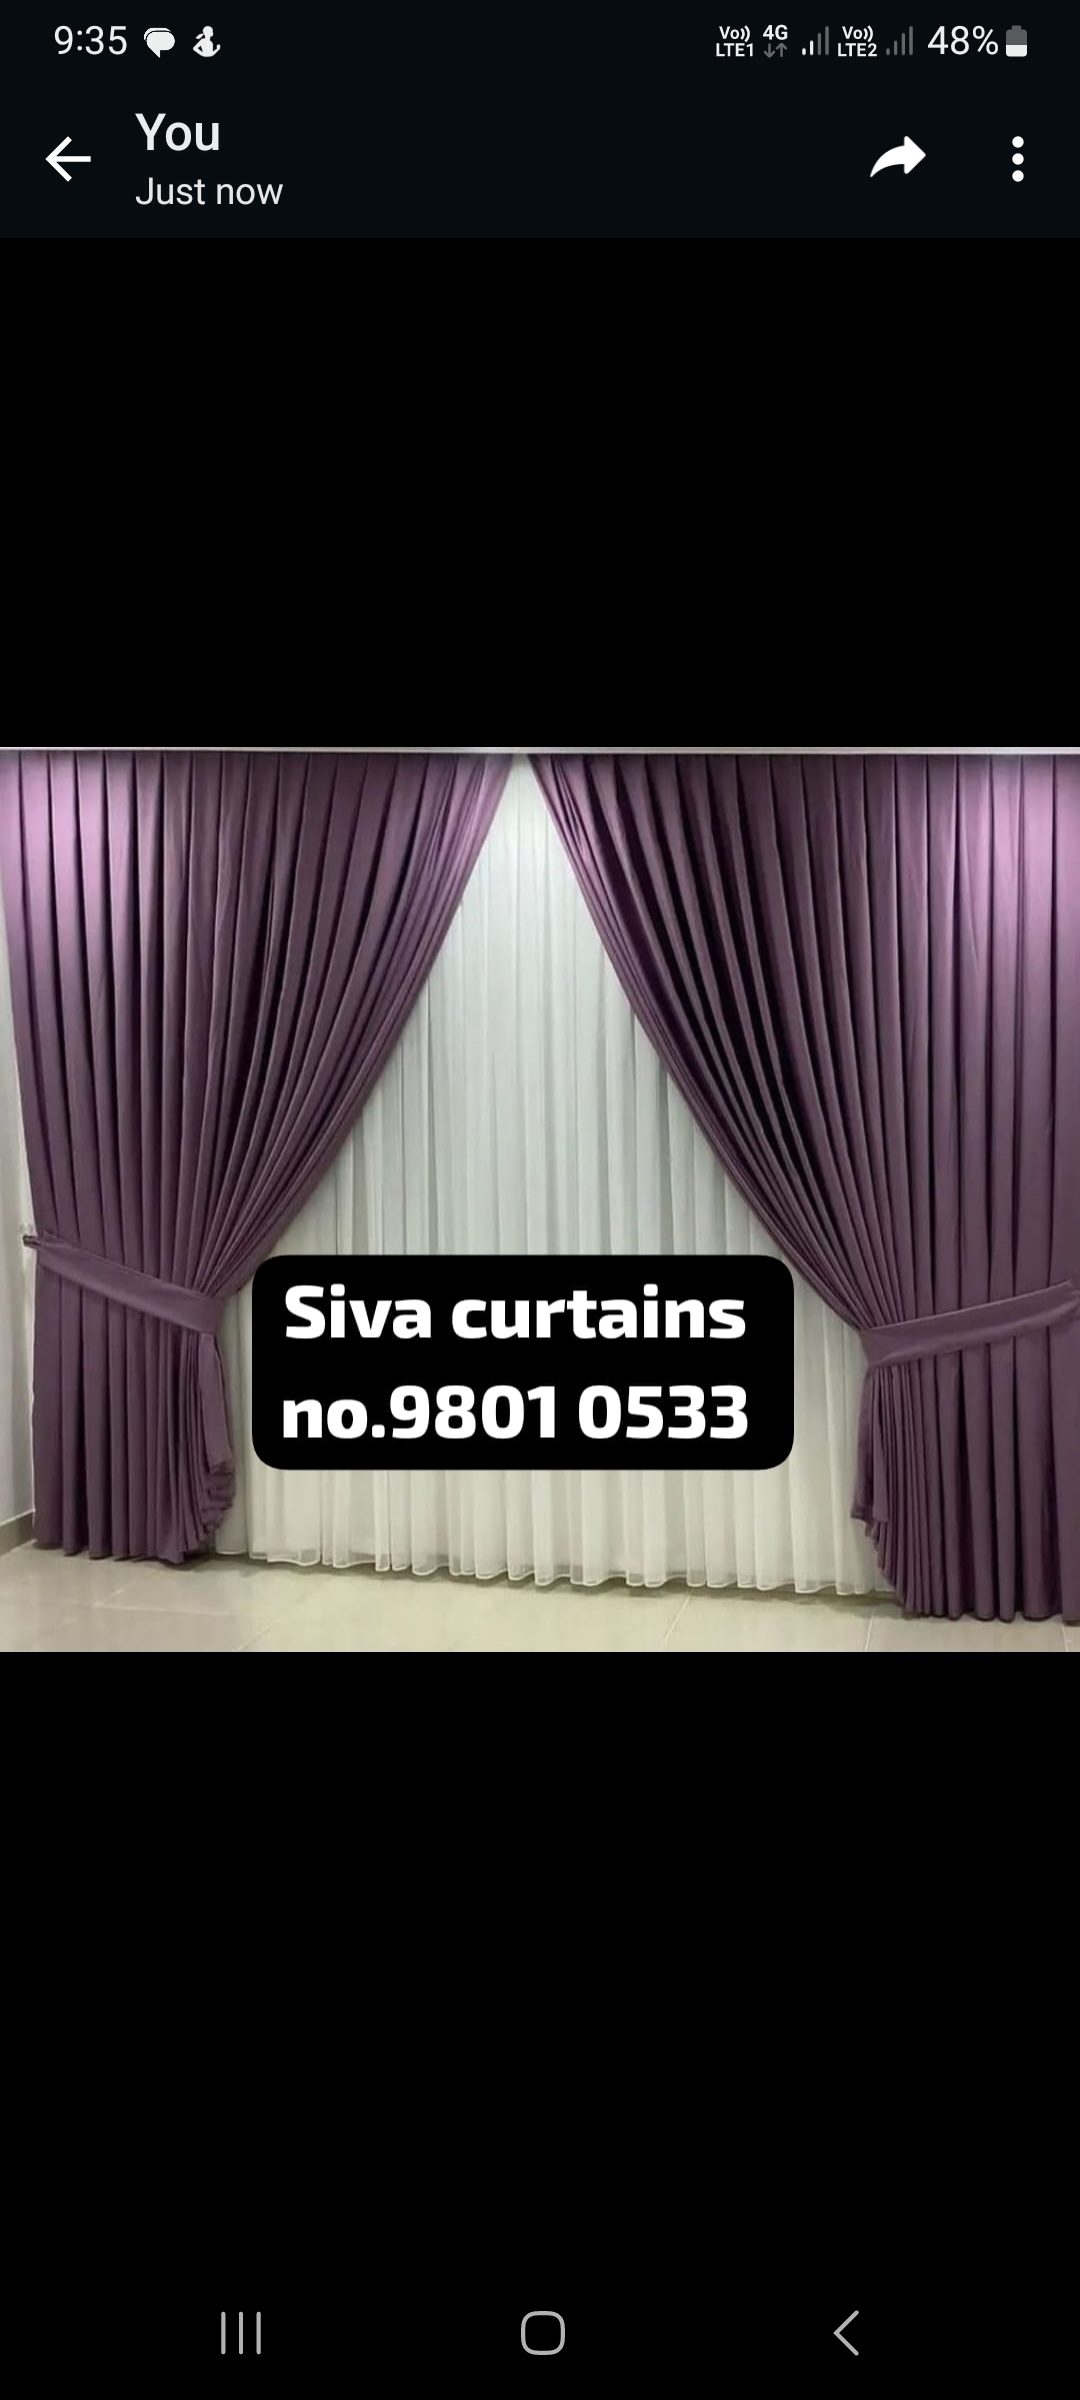 Siva Curtains No.98010533 